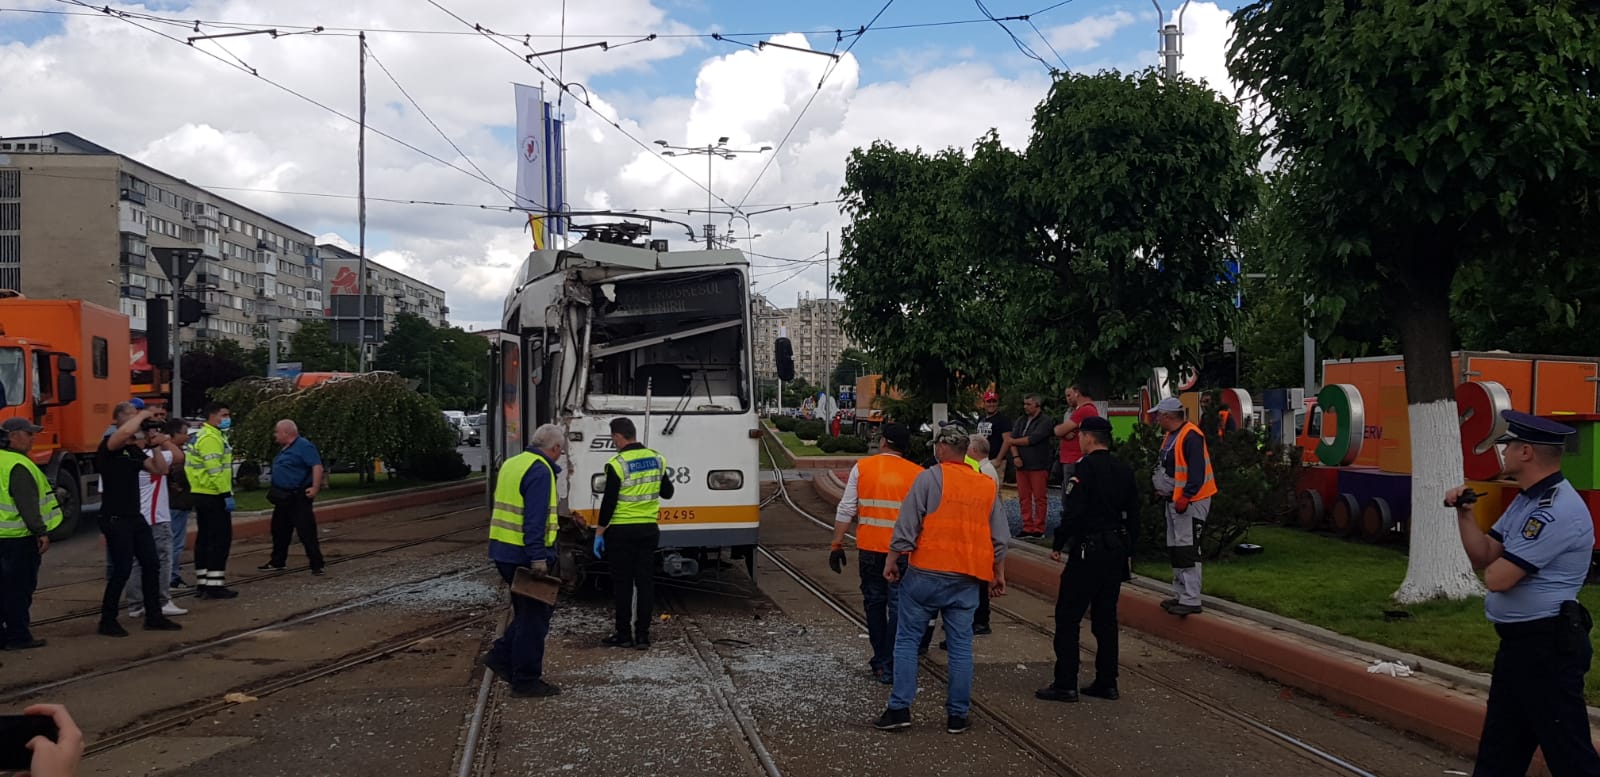 https://media.hotnews.ro/media_server1/image-2020-05-27-24019886-0-accident-tramvaie-sura-mare-1.jpeg